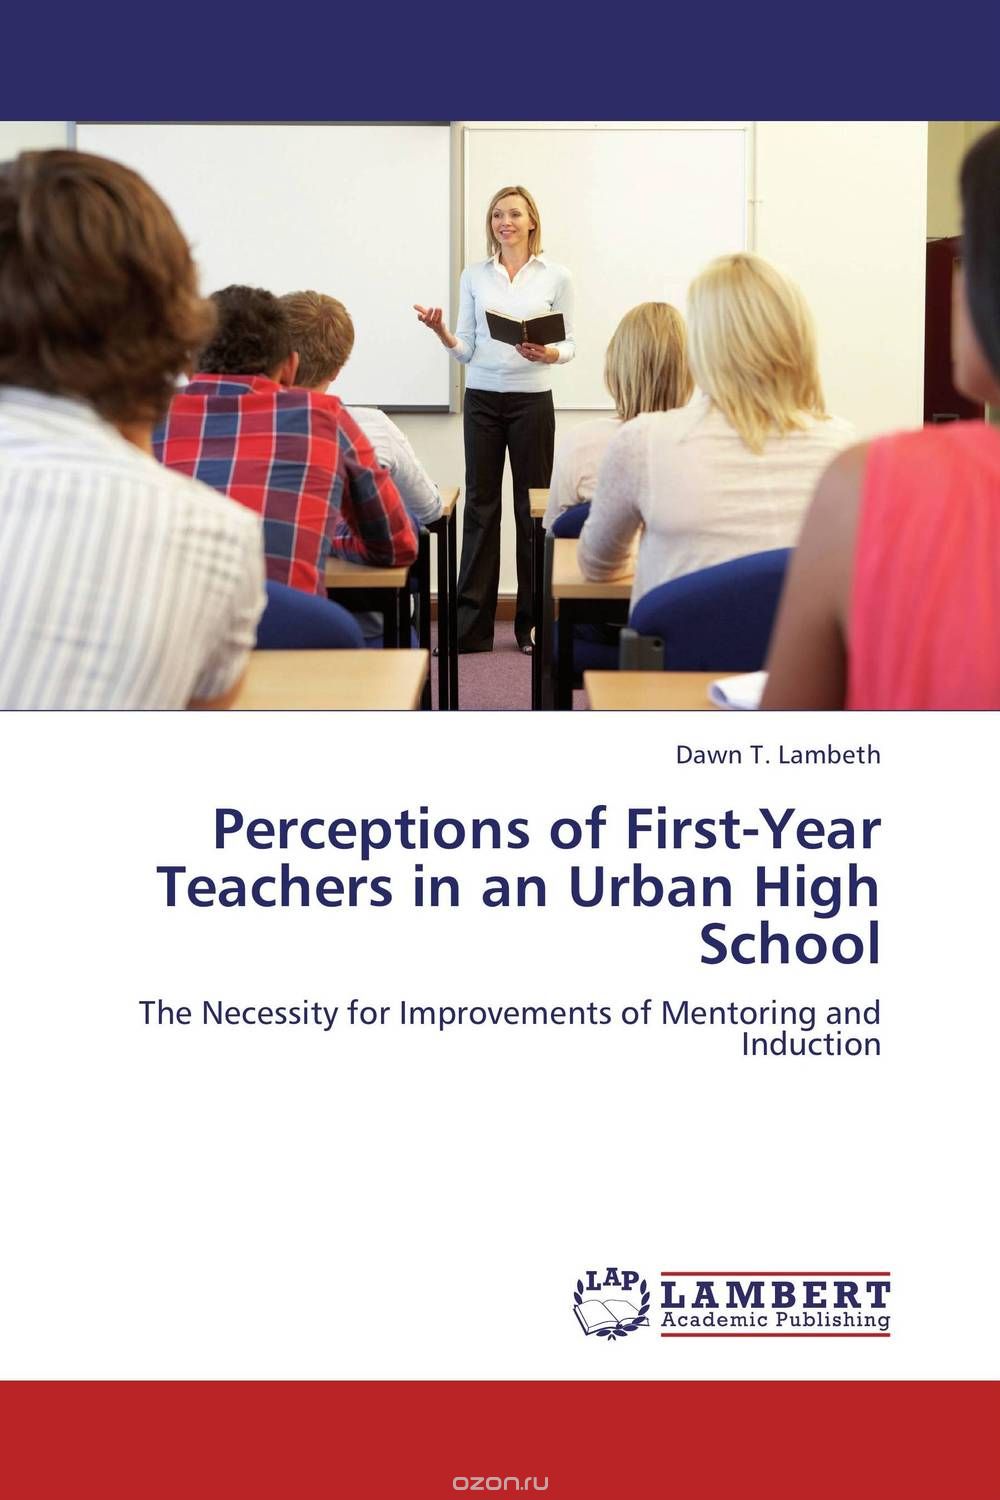 Скачать книгу "Perceptions of First-Year Teachers in an Urban High School"